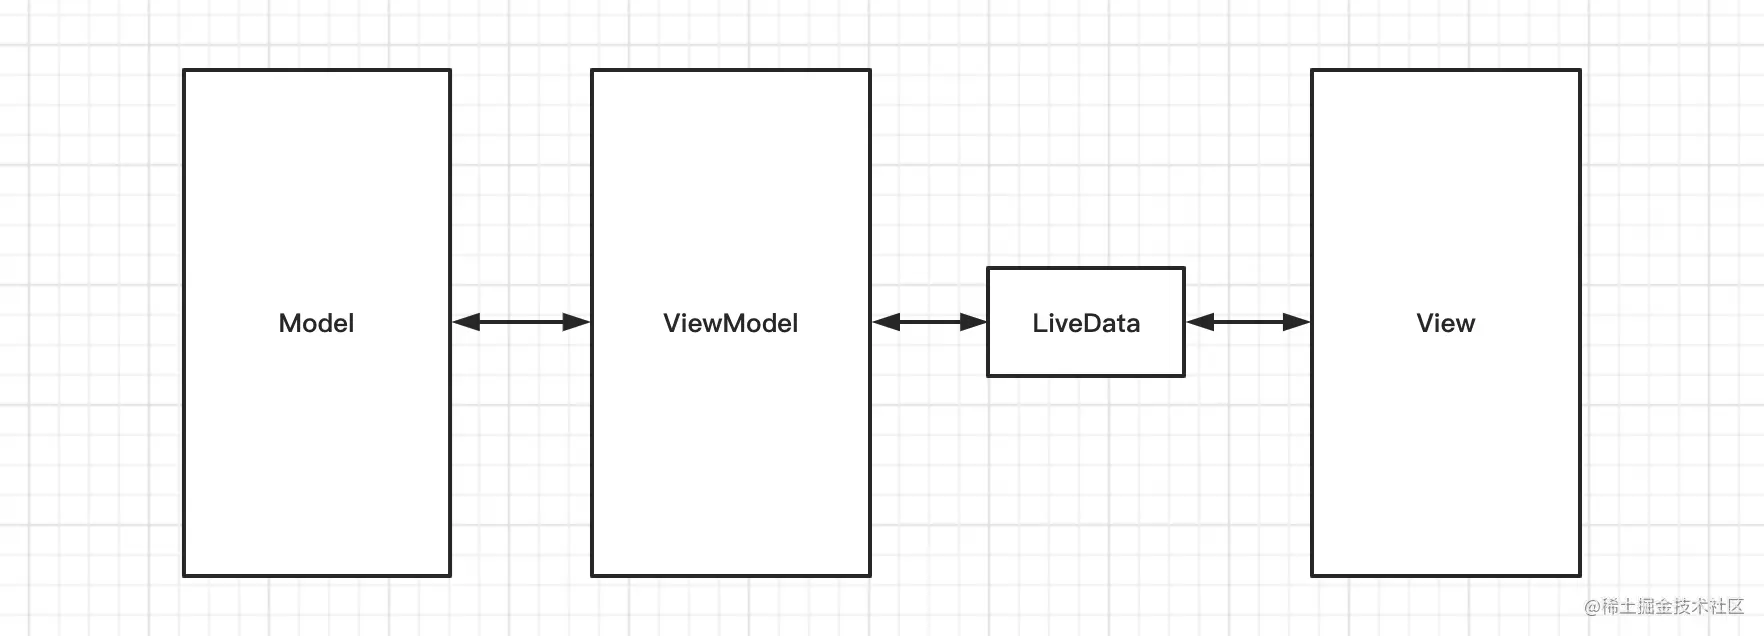 MVVM 数据交互图